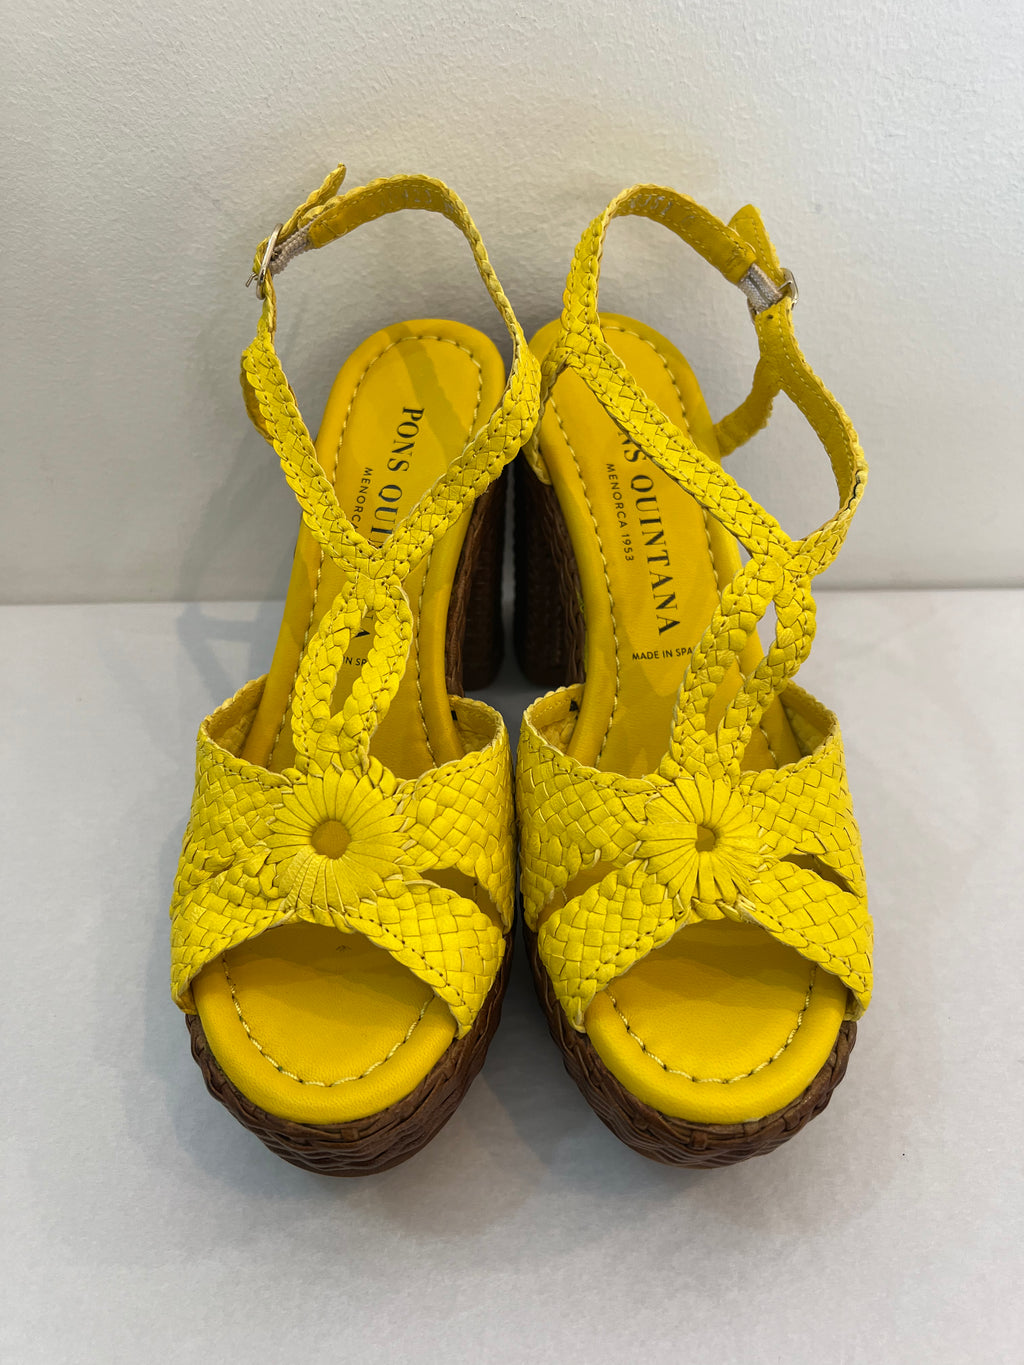 Hetre Alresford Hampshire Shoe Store Pons Quintana Yellow Woven Platform Sandal